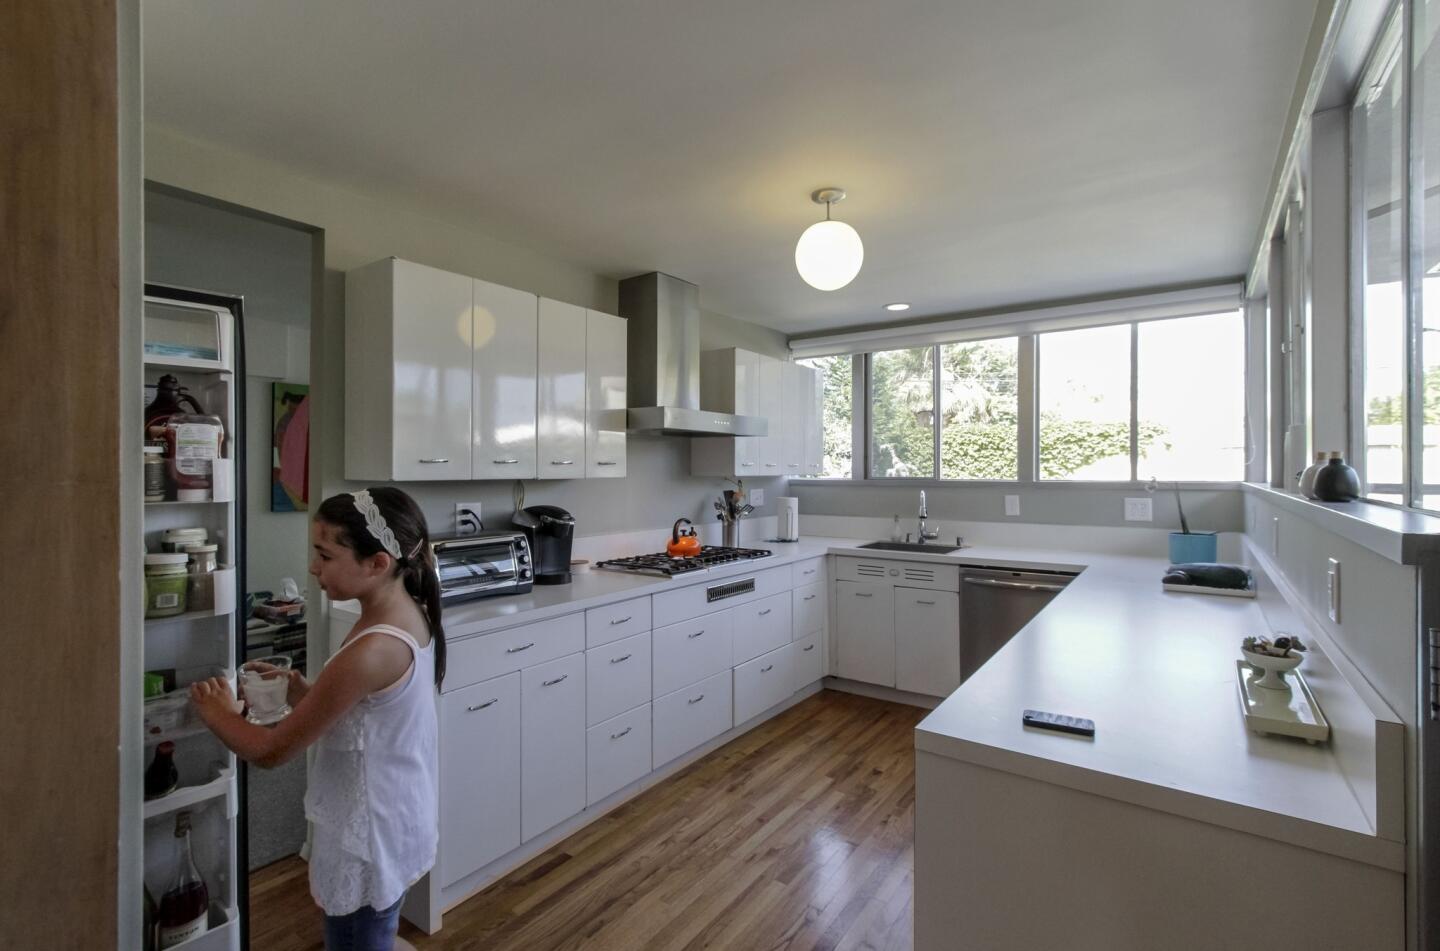 Raphael Soriano renovation: the kitchen